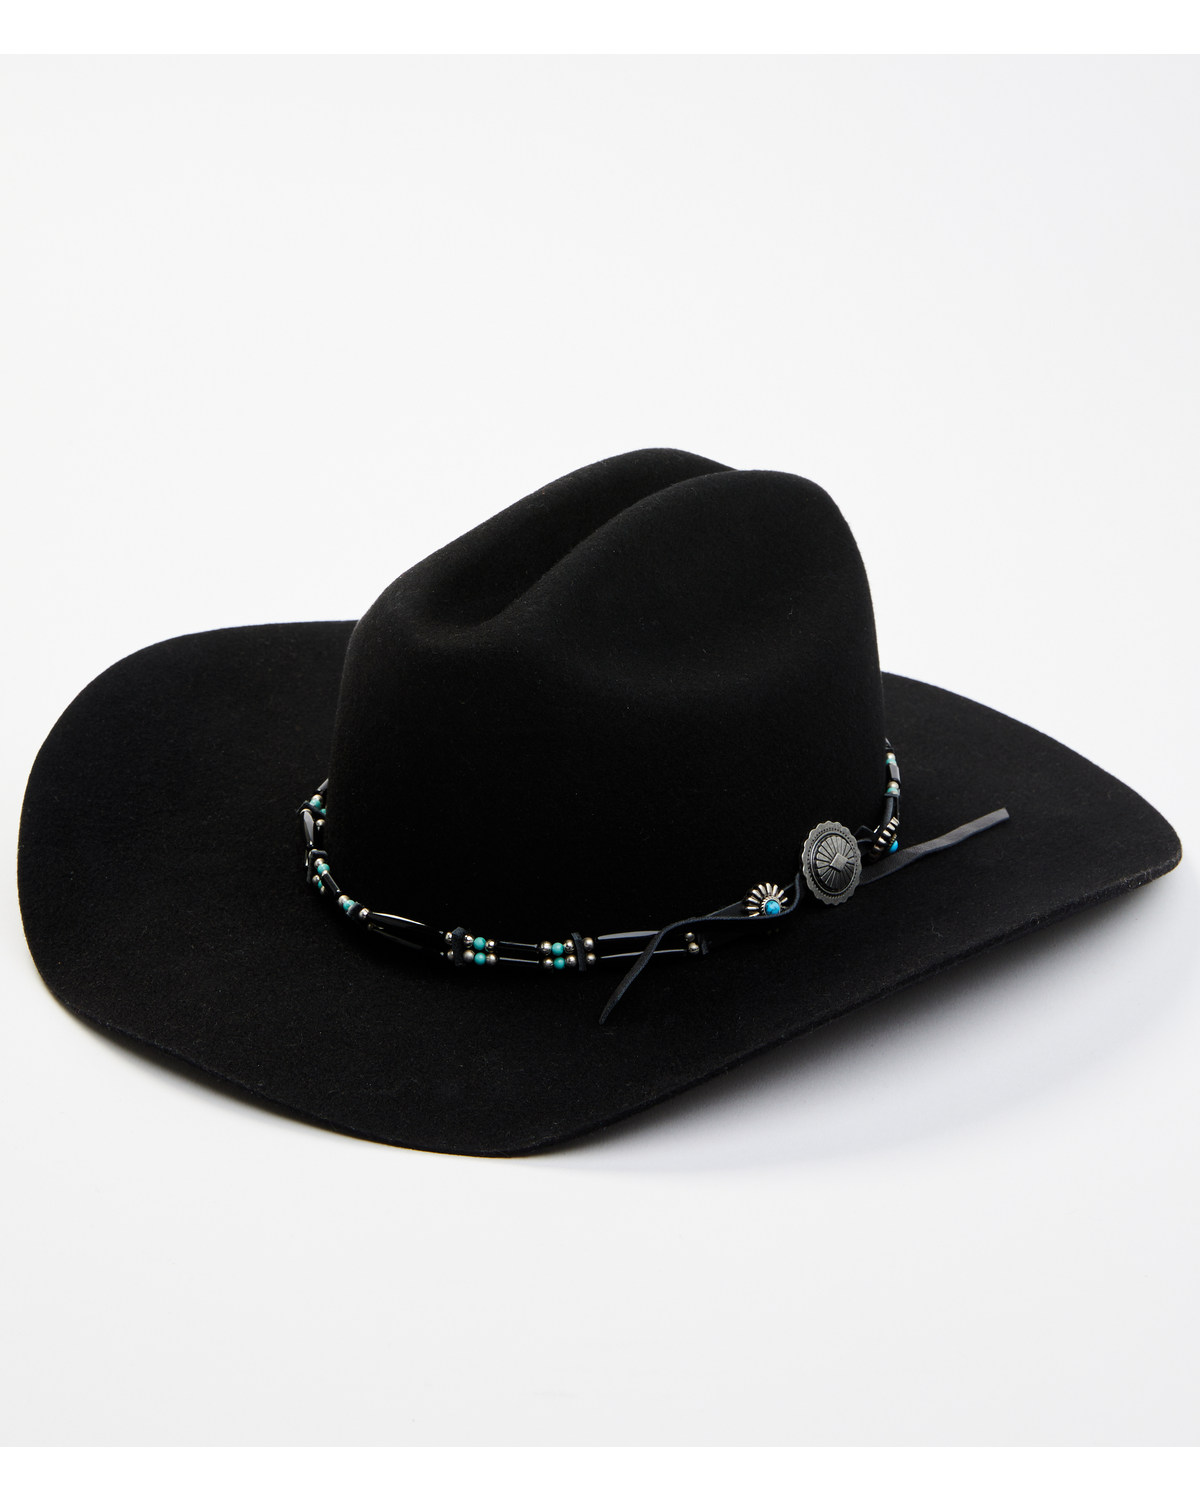 Shyanne Women's Felt Cowboy Hat